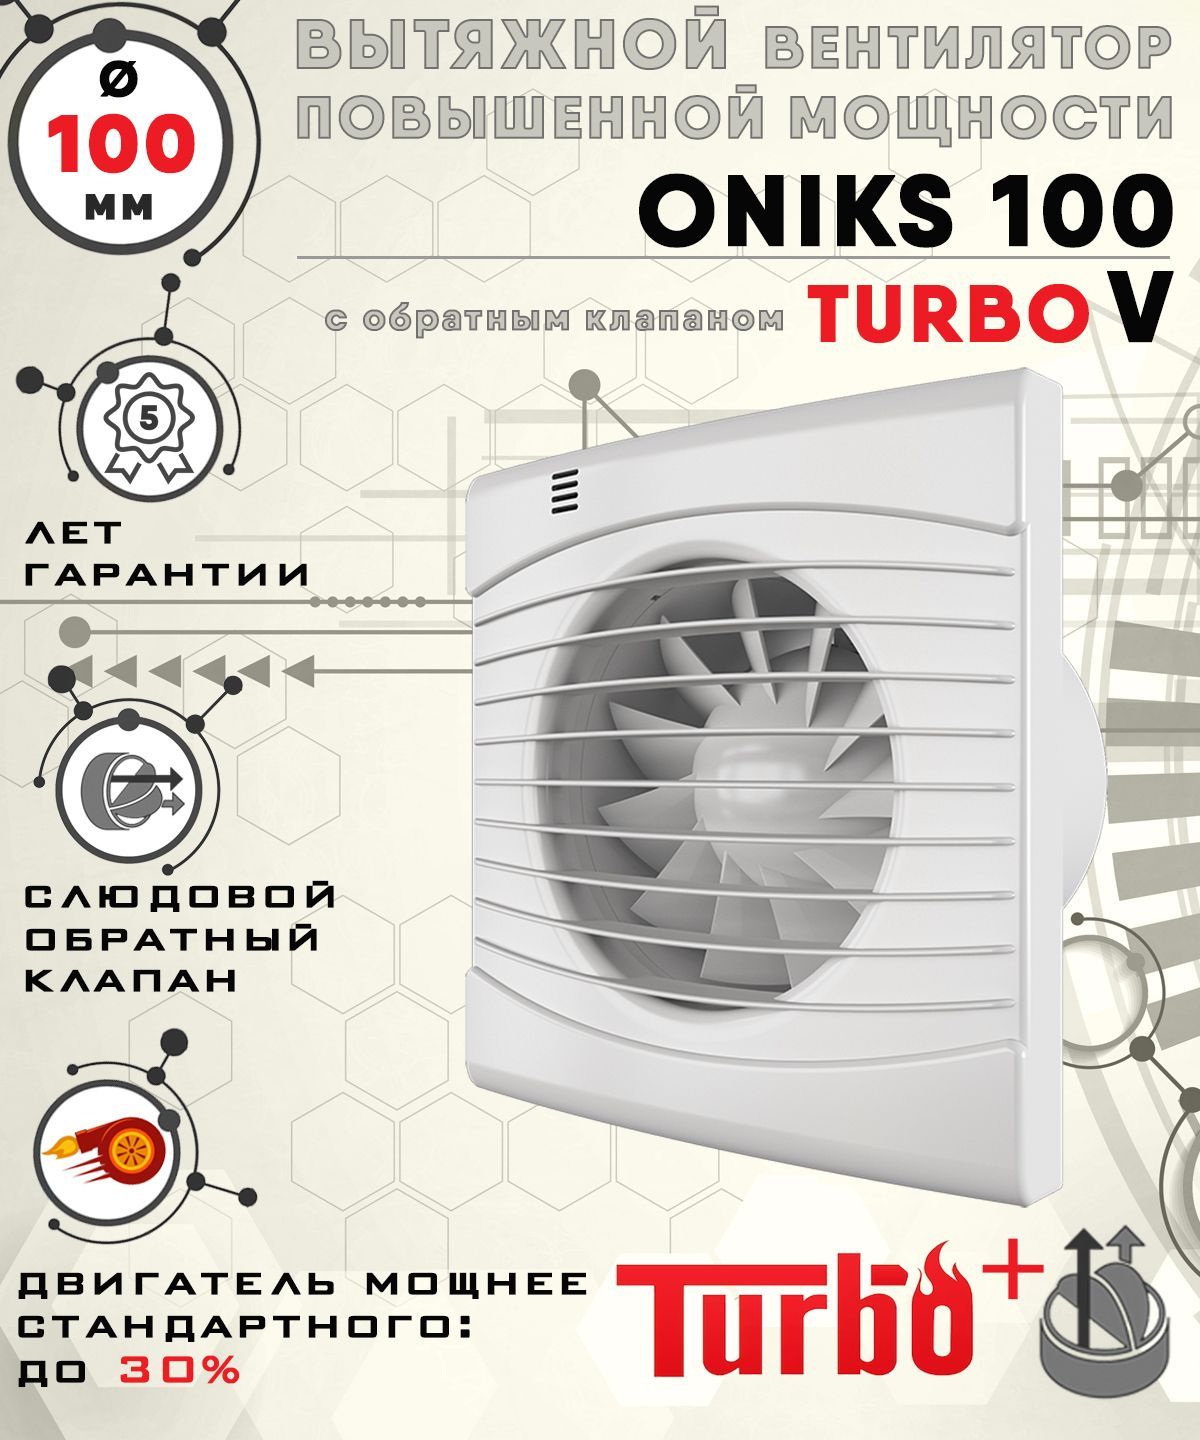 ONIKS 100 TURBO V вентилятор вытяжной диаметр 100 мм ZERNBERG